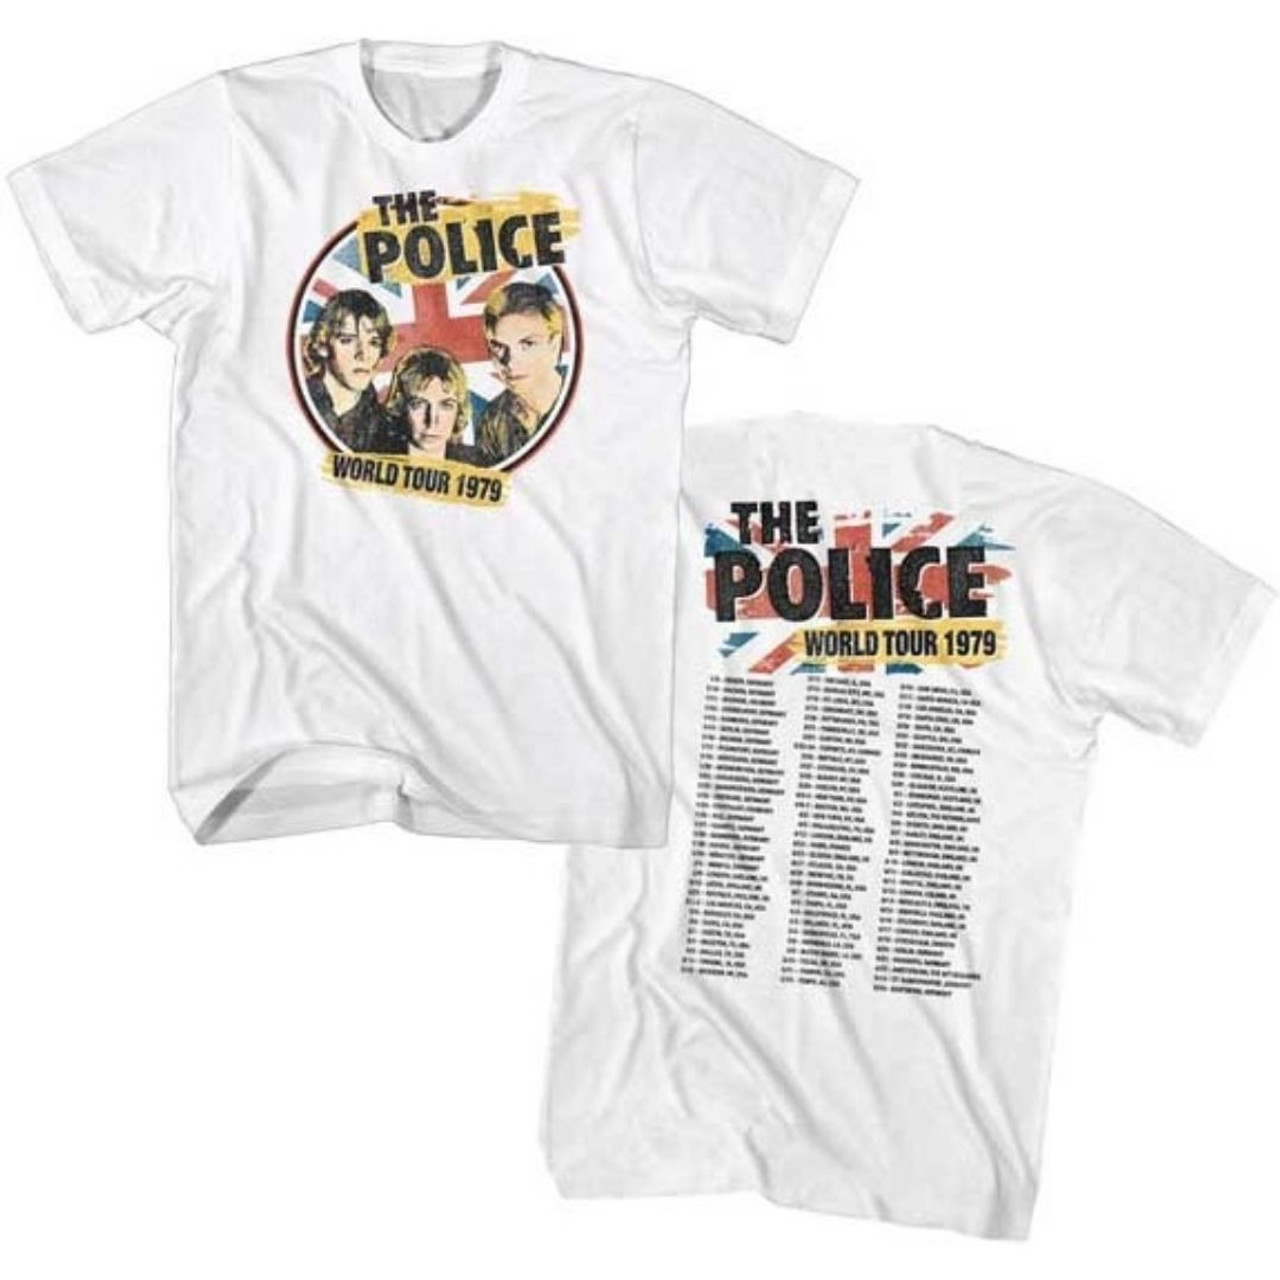 The Police Vintage Concert Fashion T-shirt World Tour Men's Unisex White Shirt - Rocker Rags